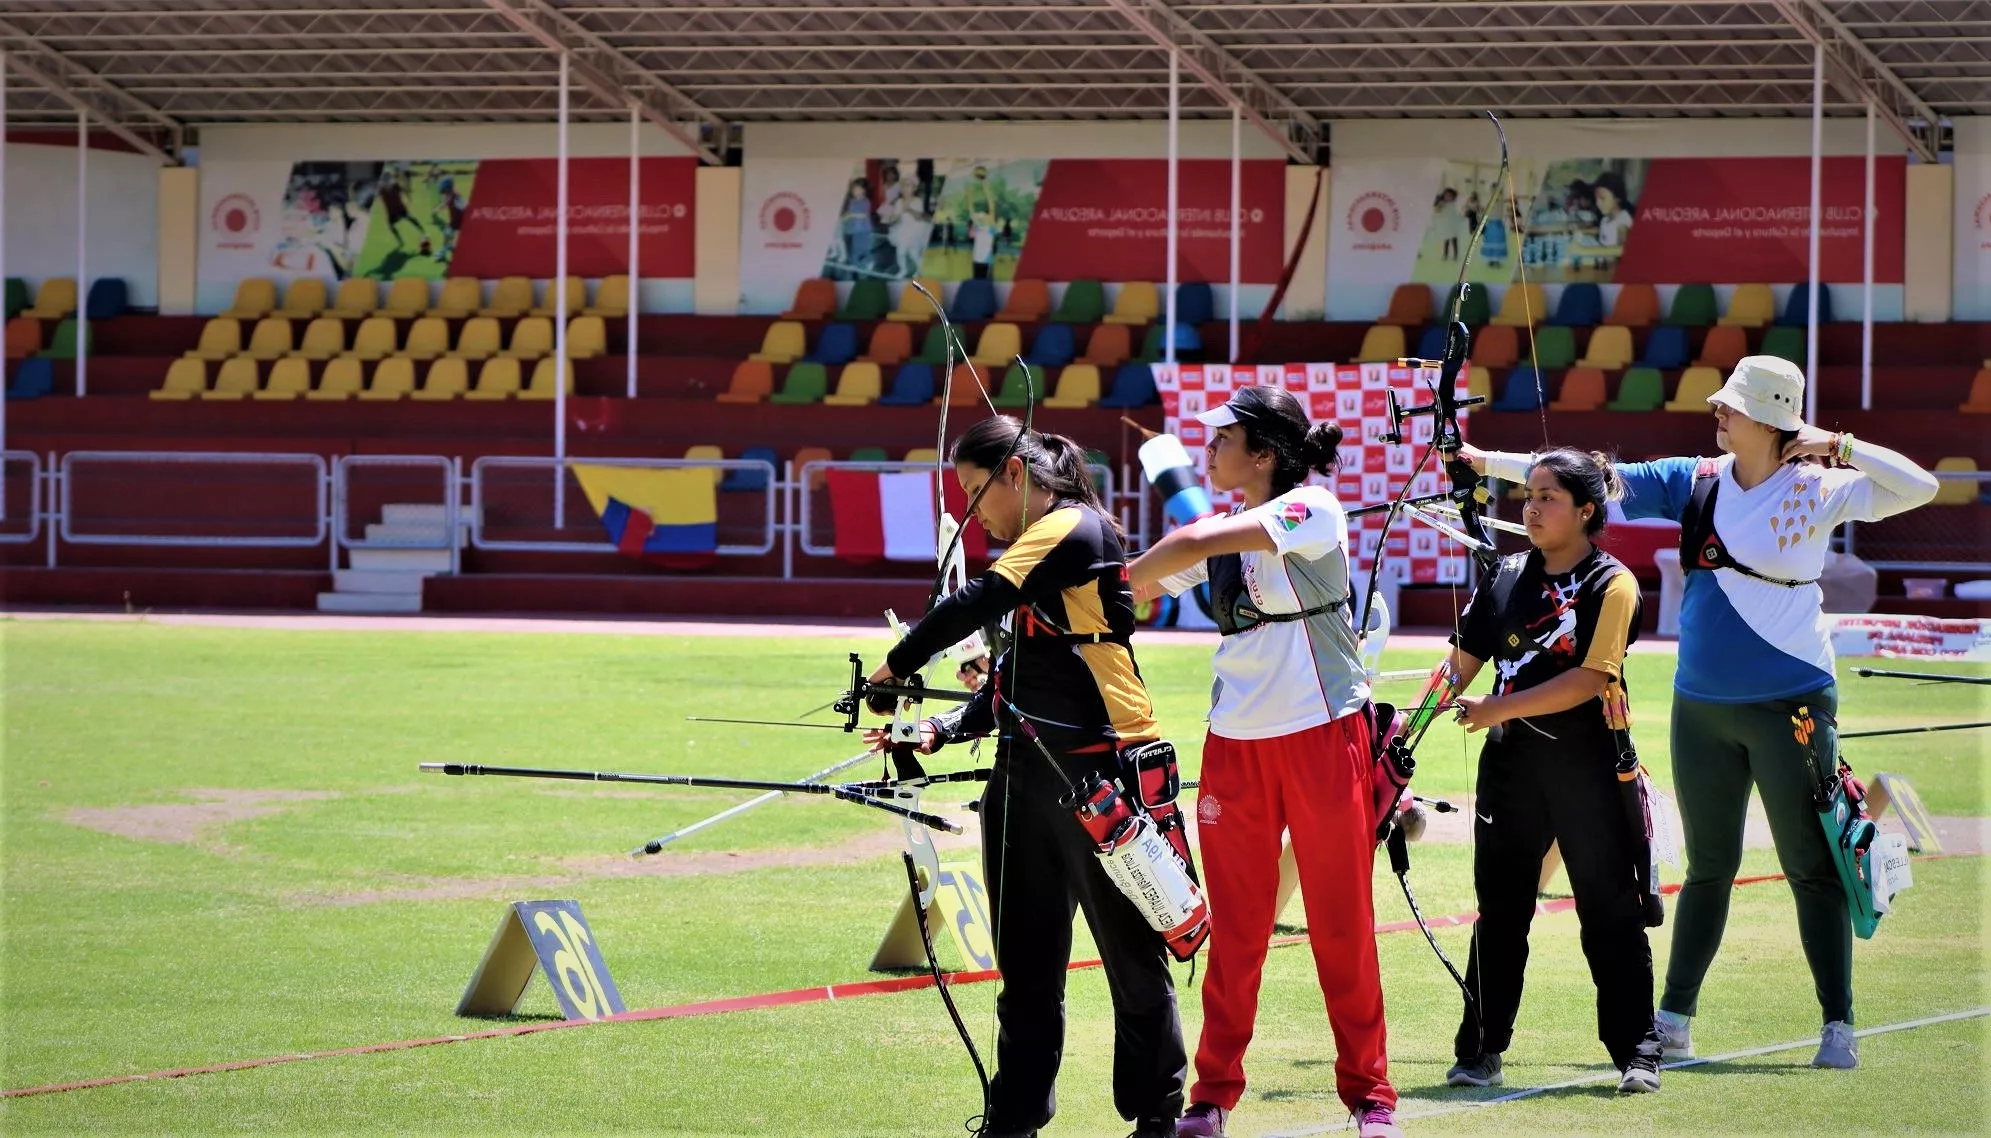 Arqueros Molineros in Peru, South America | Archery - Rated 0.9